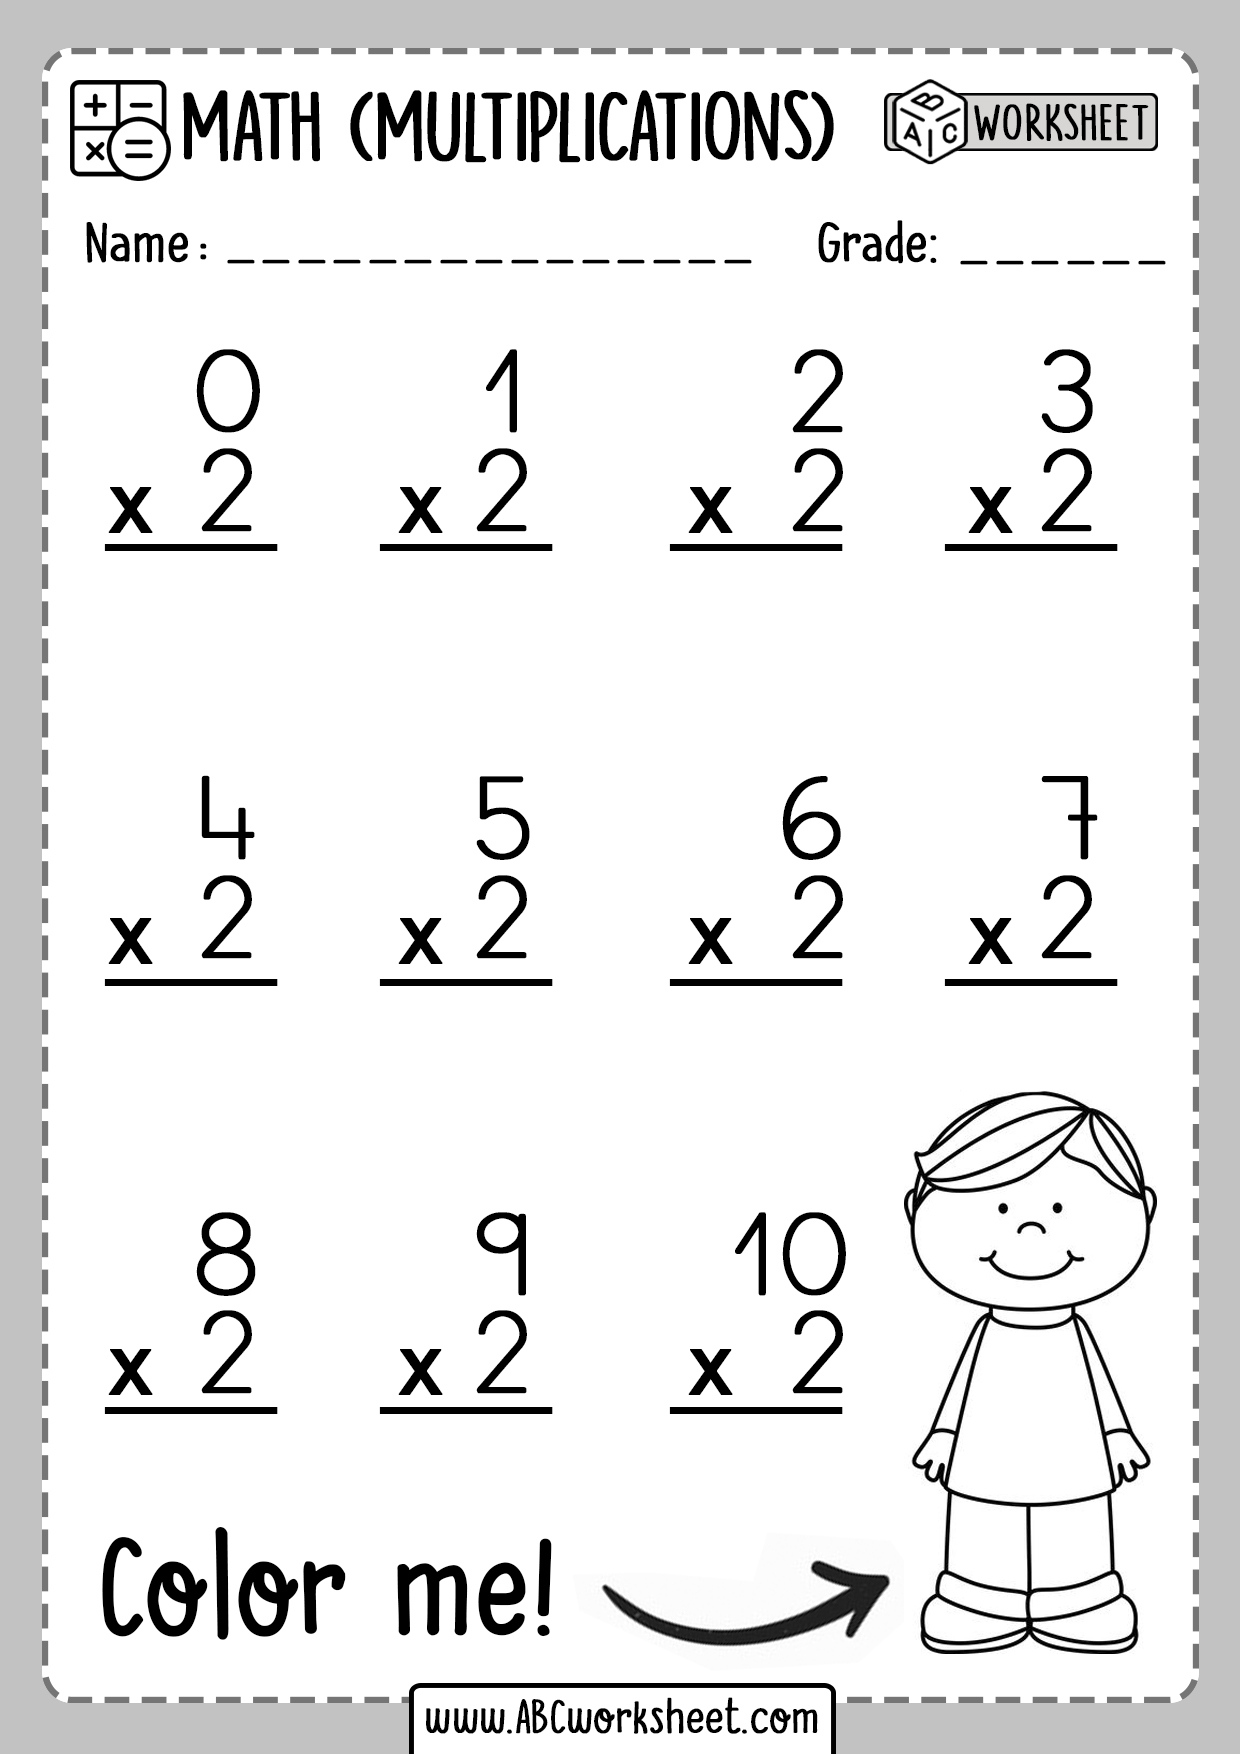  Multiplication 2s Worksheet Multiplication Worksheets